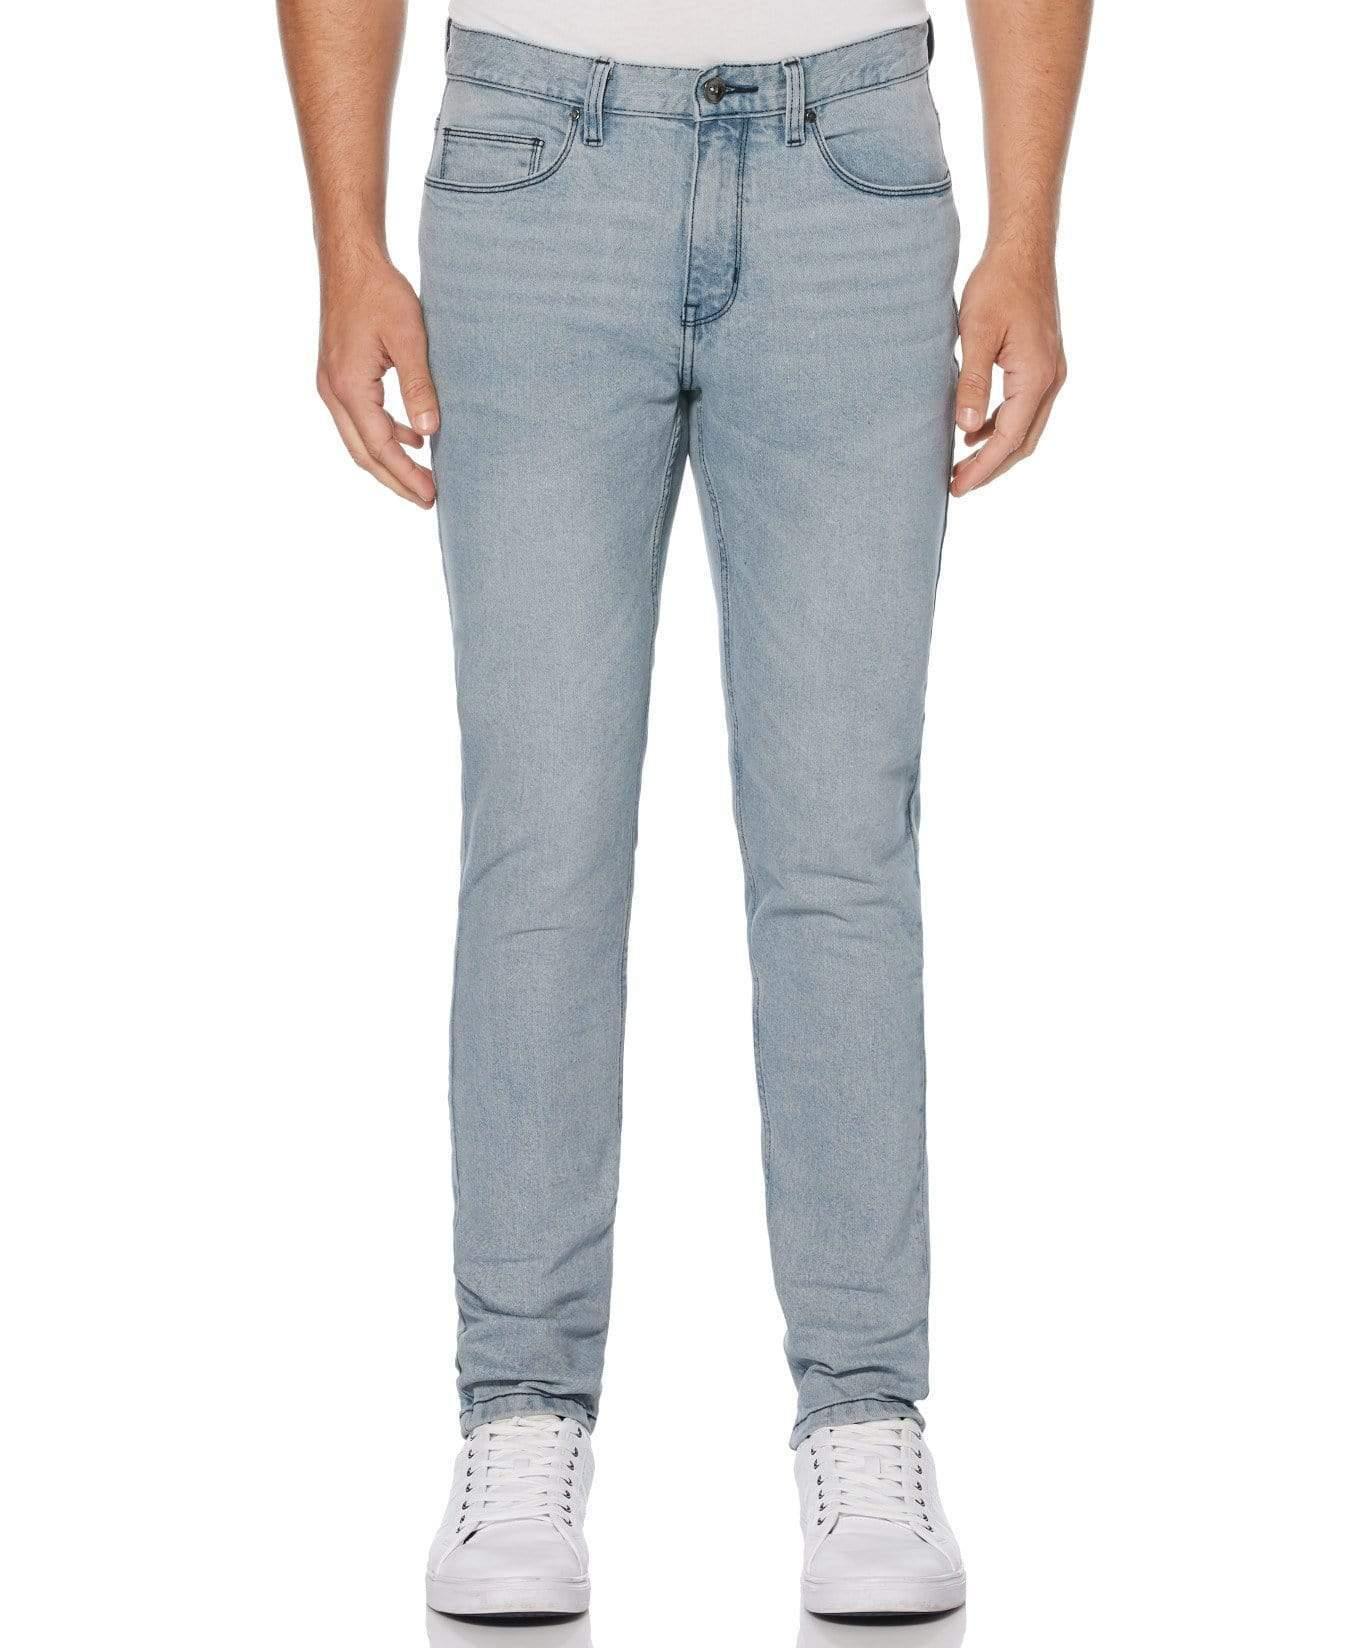 Perry Ellis Very Slim Stretch Denim Jeans in Blue for Men - Lyst